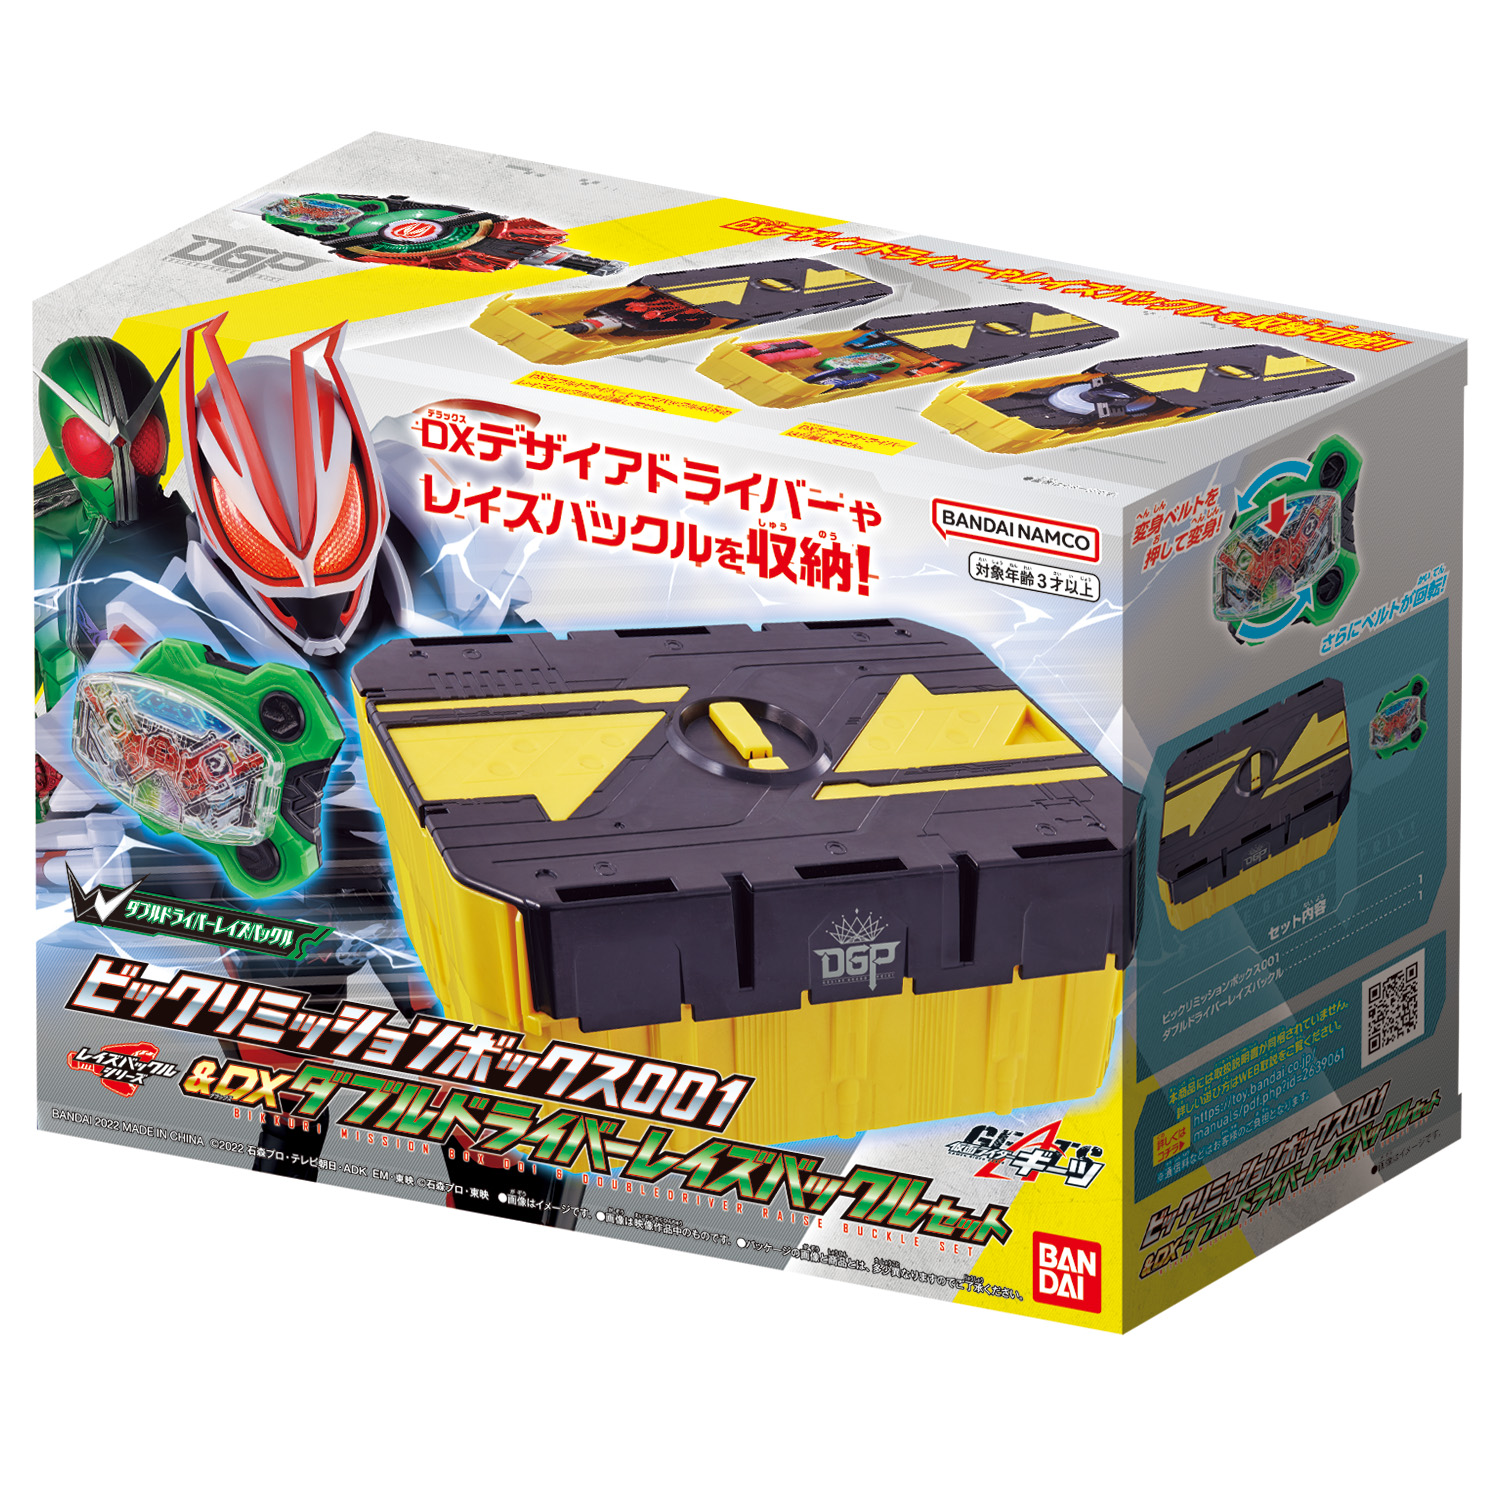 Kamen Rider Geiz Mission Box 001 Storage Box & DX Kabuto Zecter Raise